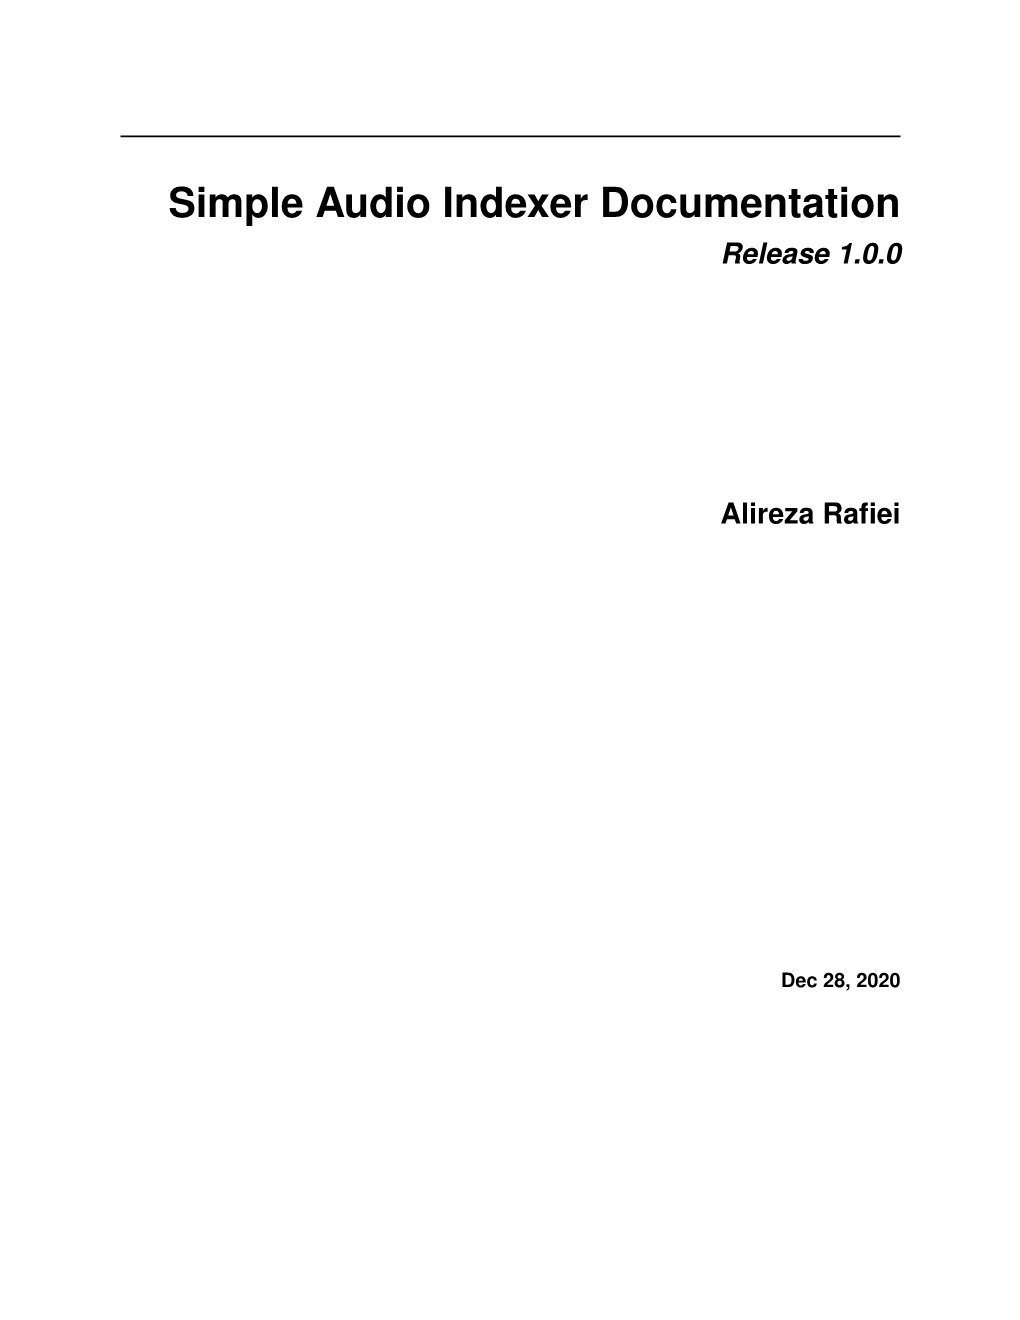 Simple Audio Indexer Documentation Release 1.0.0